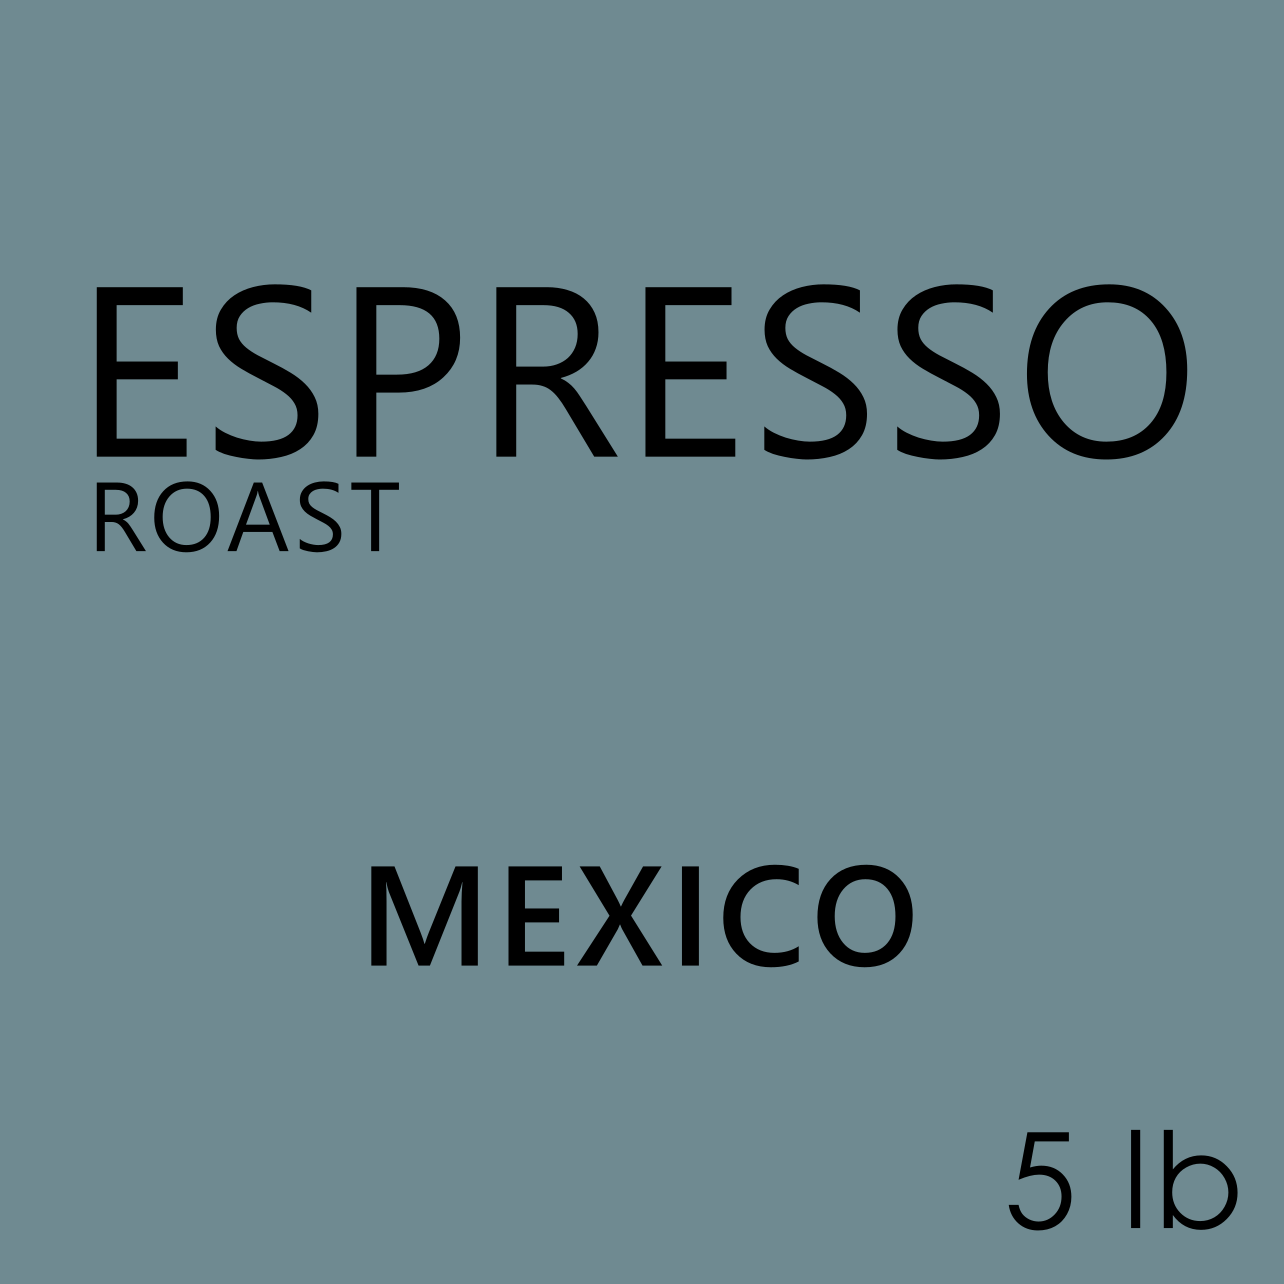 Espresso Roast (5 lb)